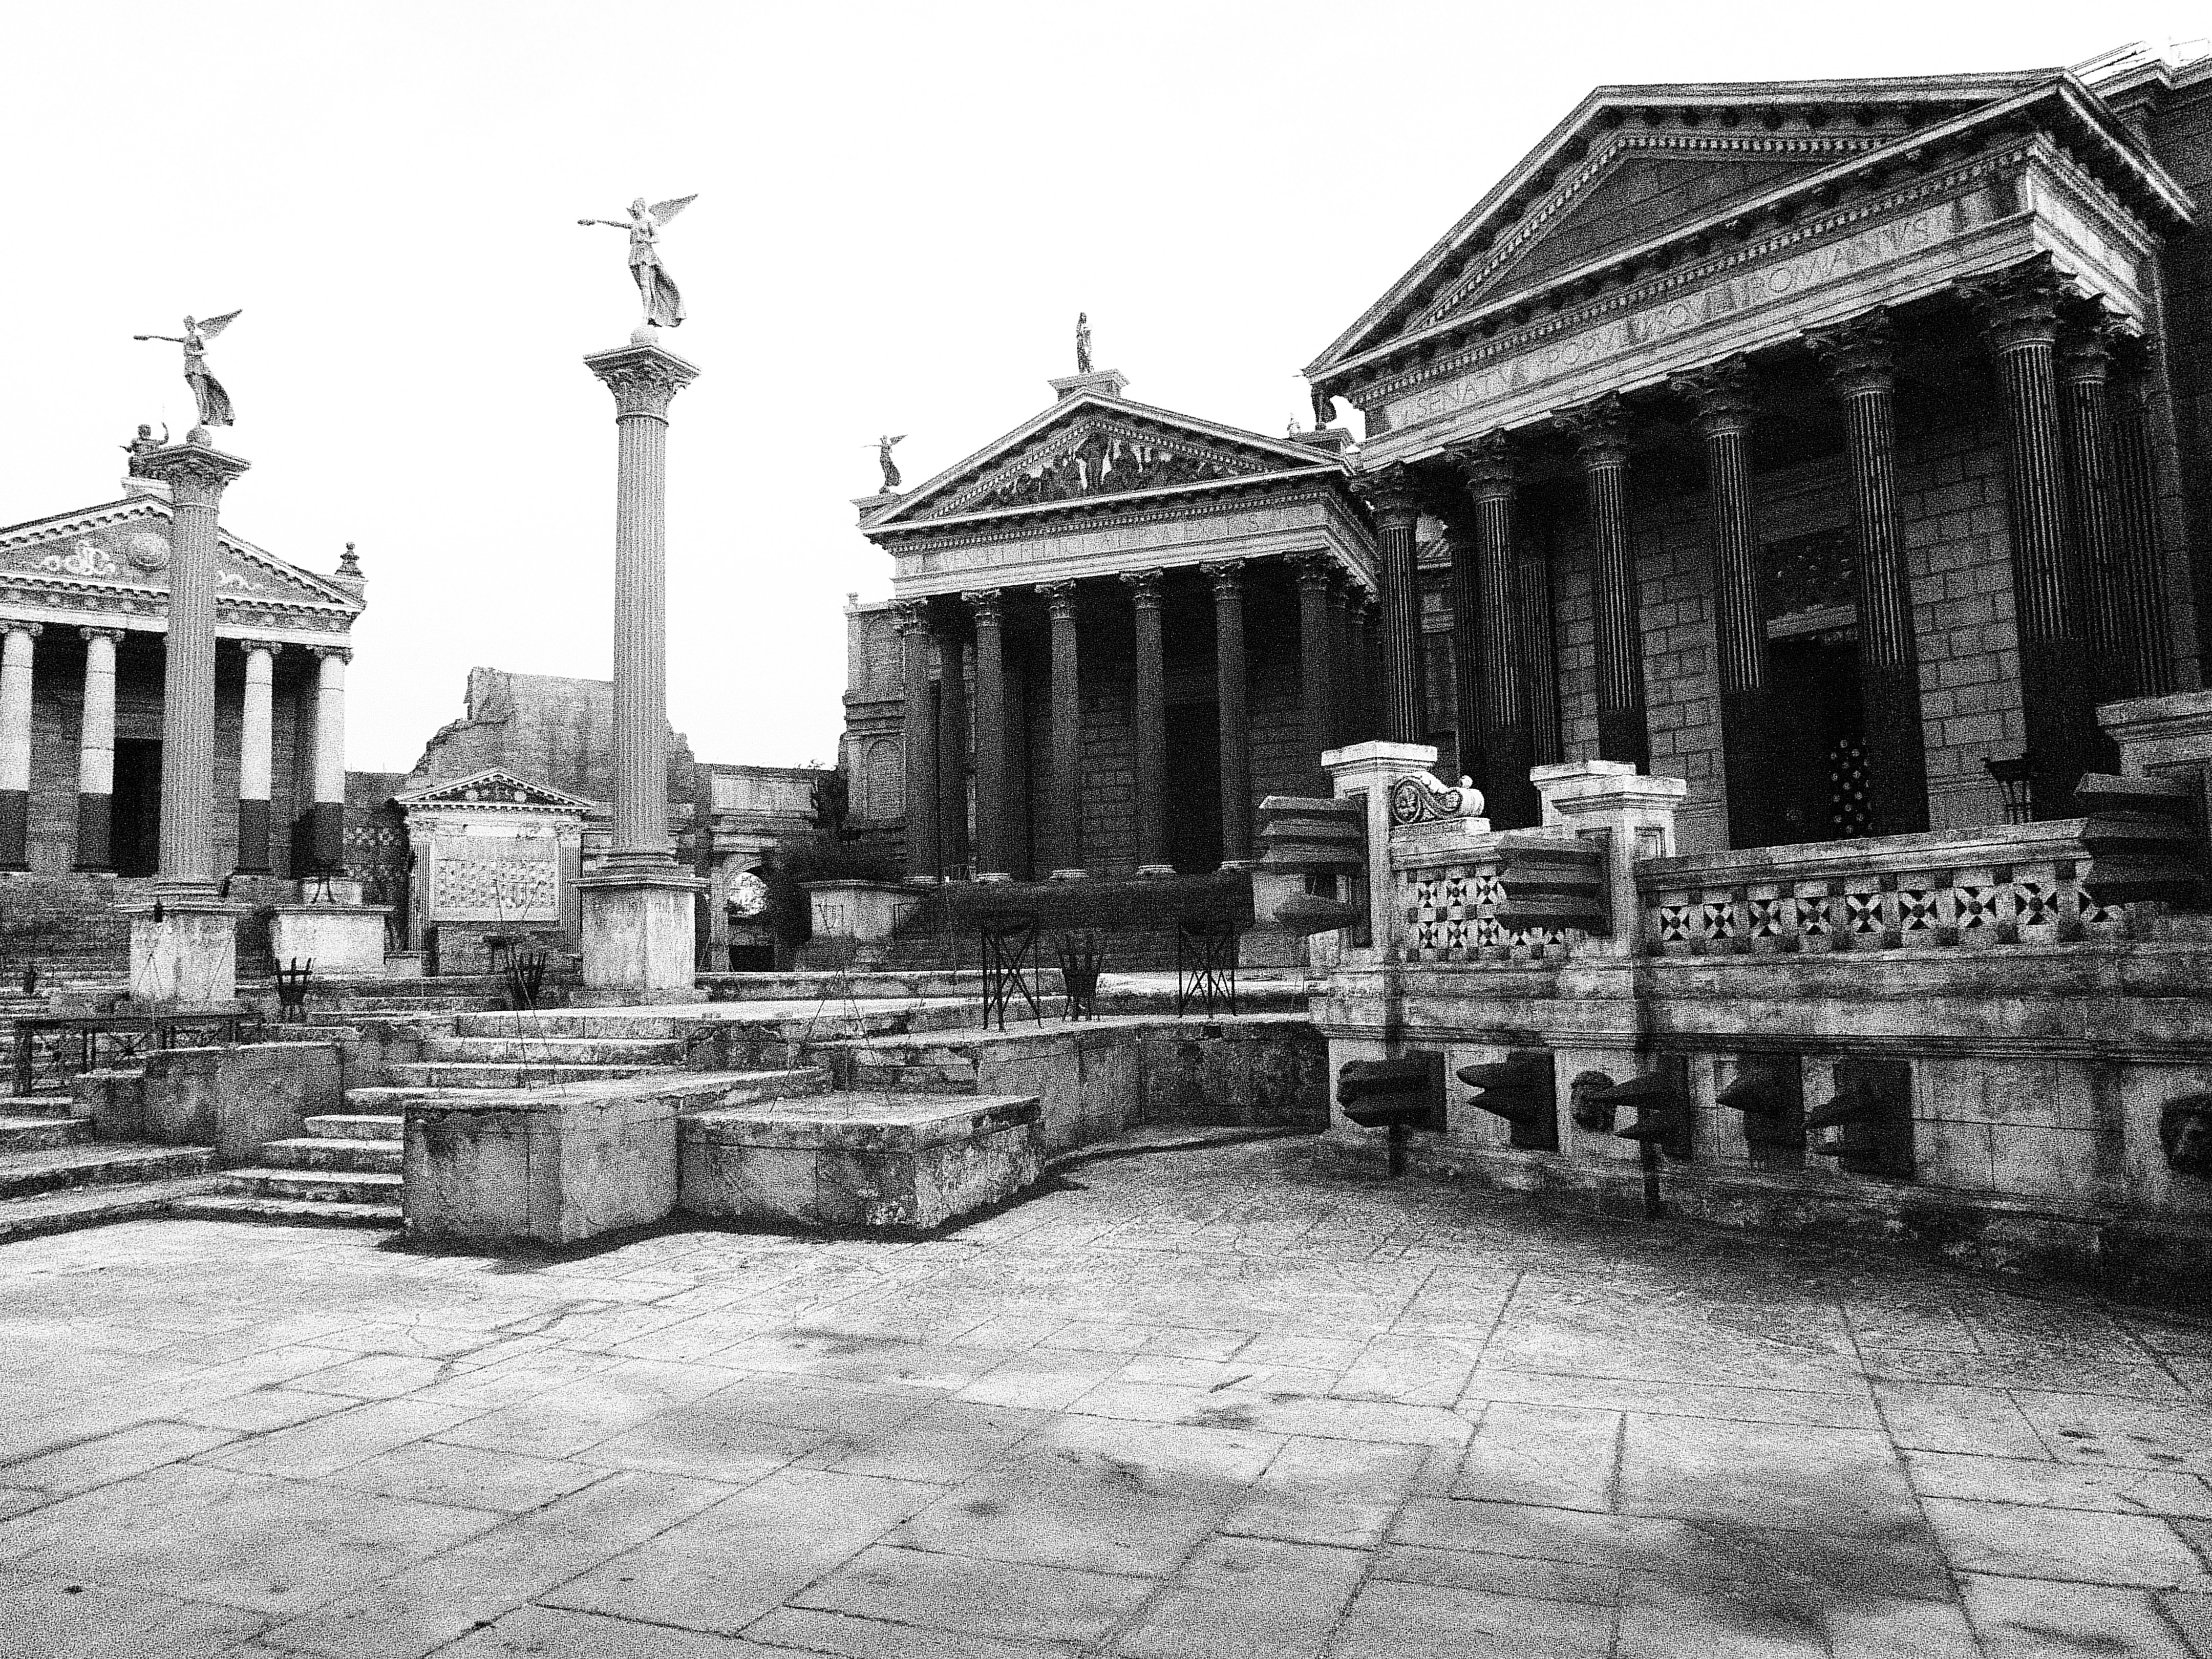 CHANEL « PARIS IN ROME », A VIEW OF THE CINECITTÀ STUDIOS